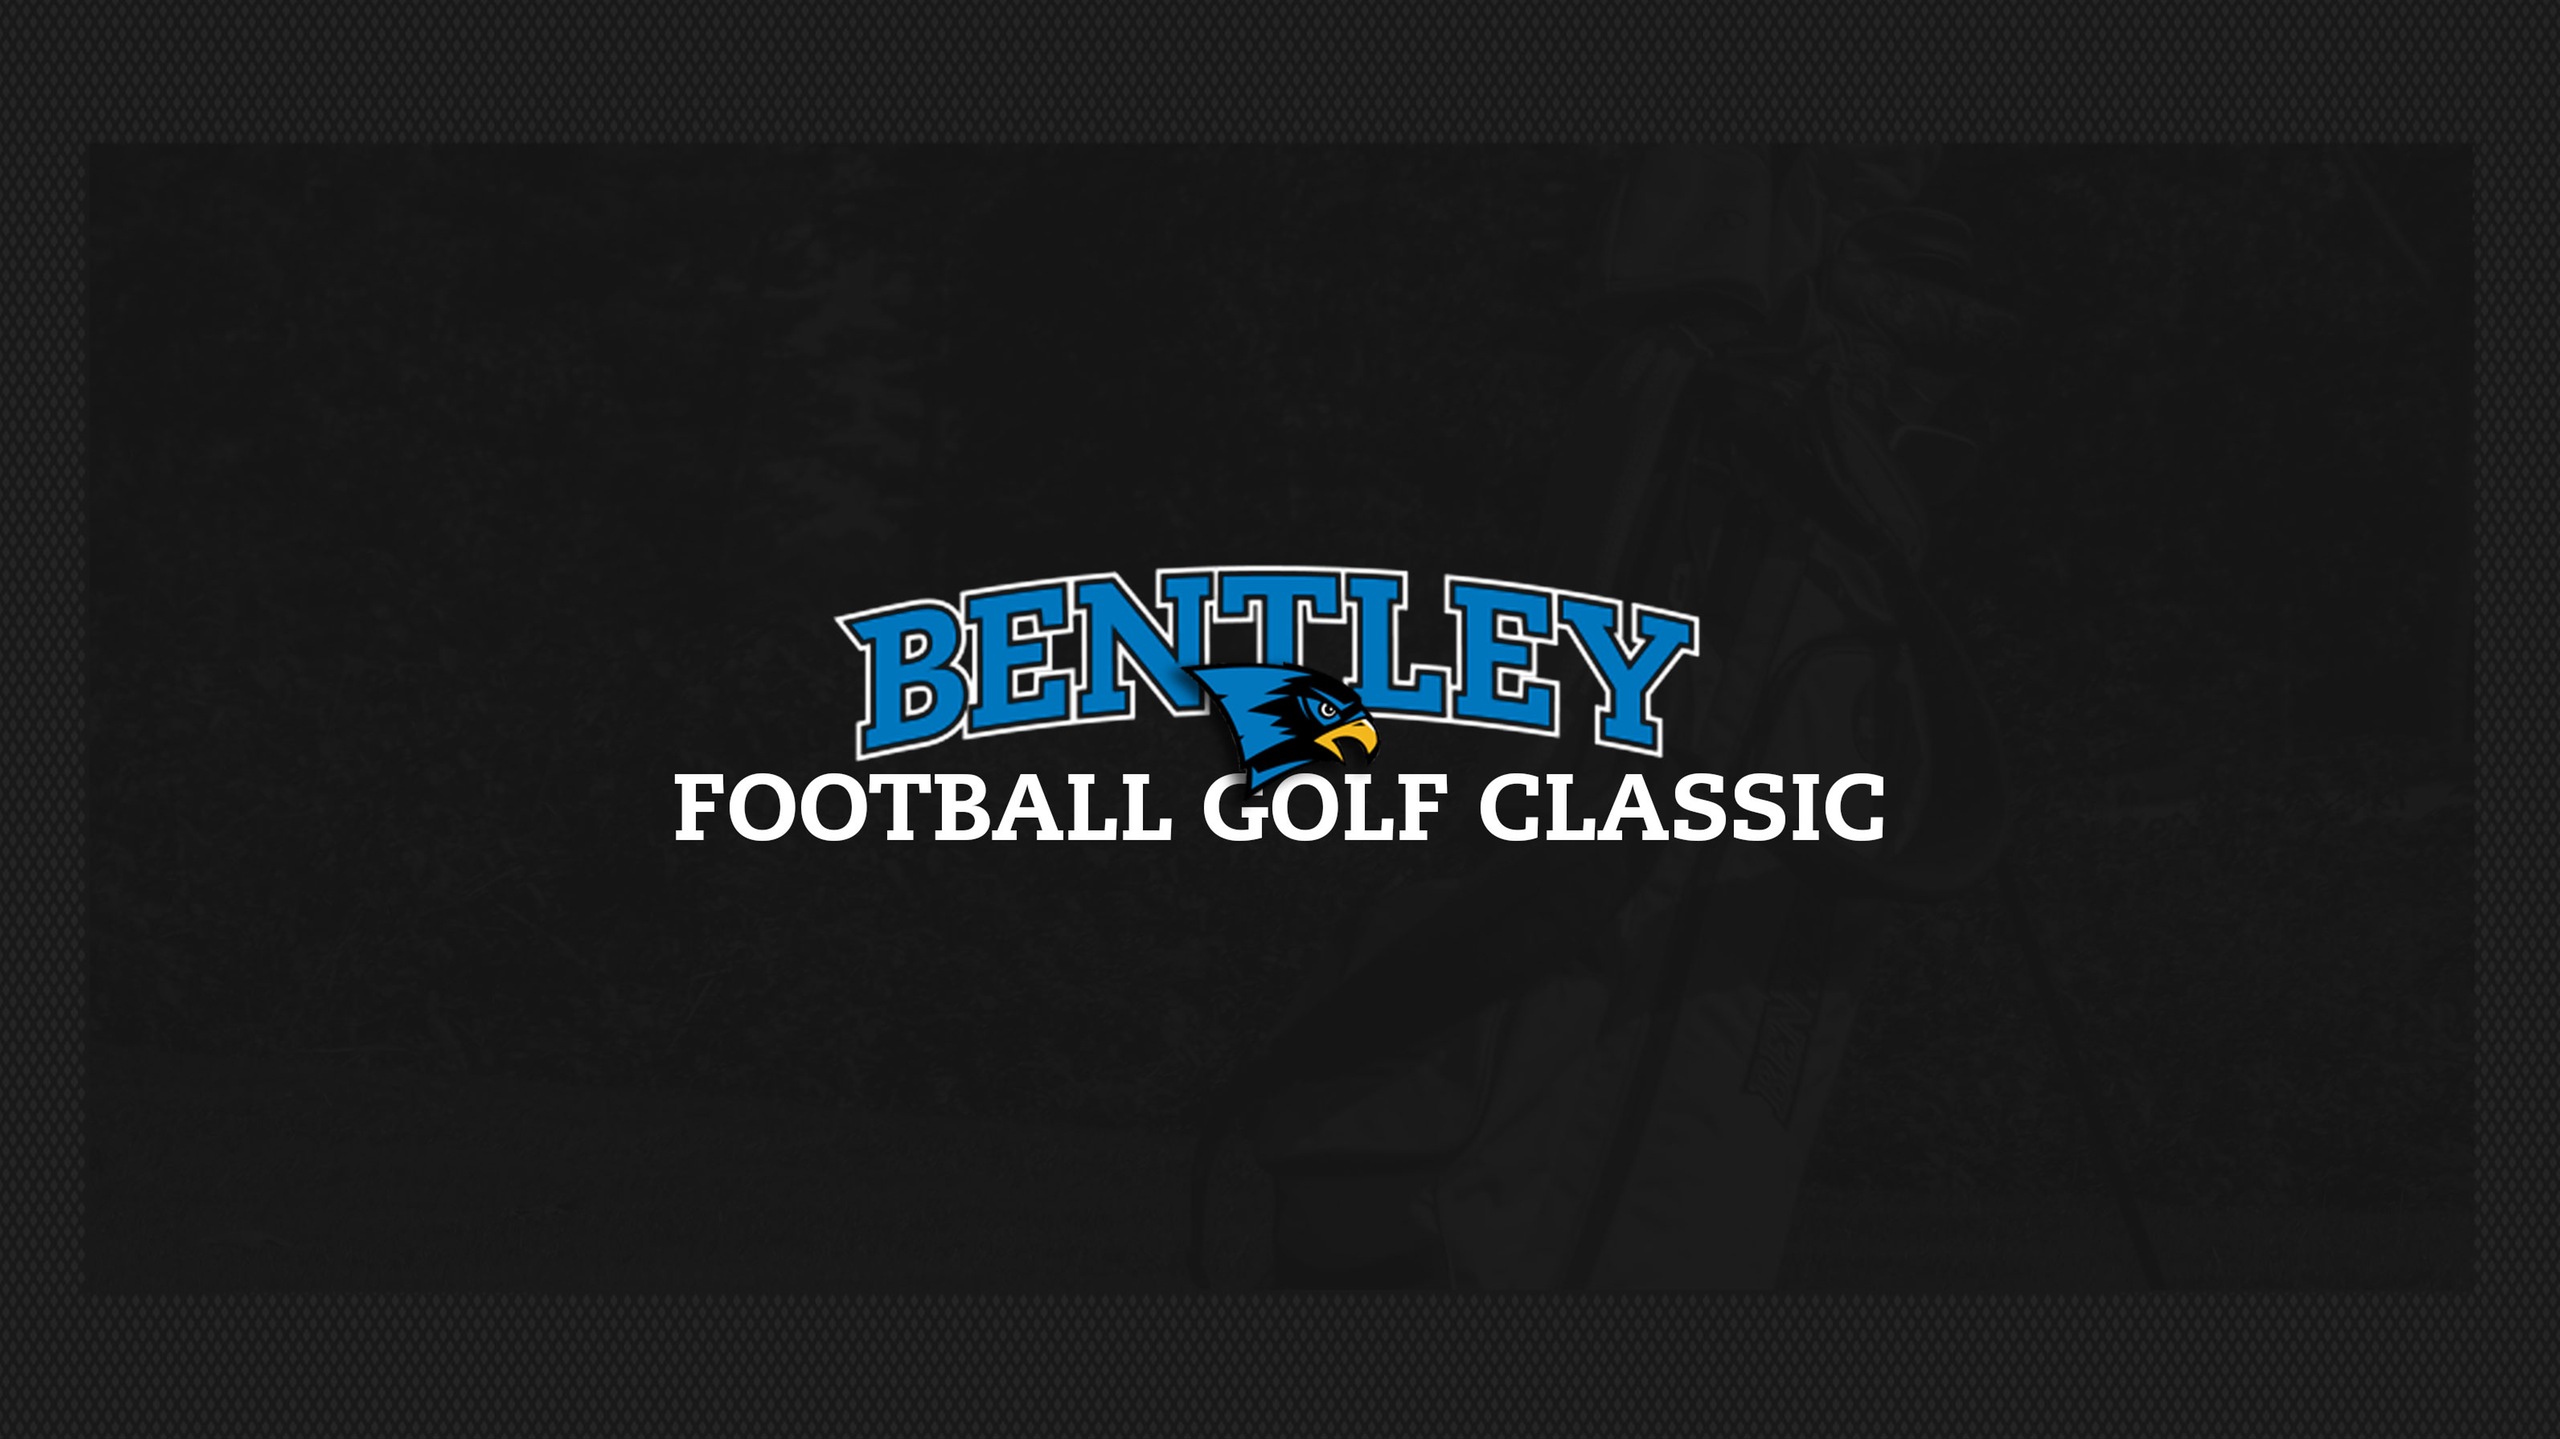 Bentley football announces golf classic